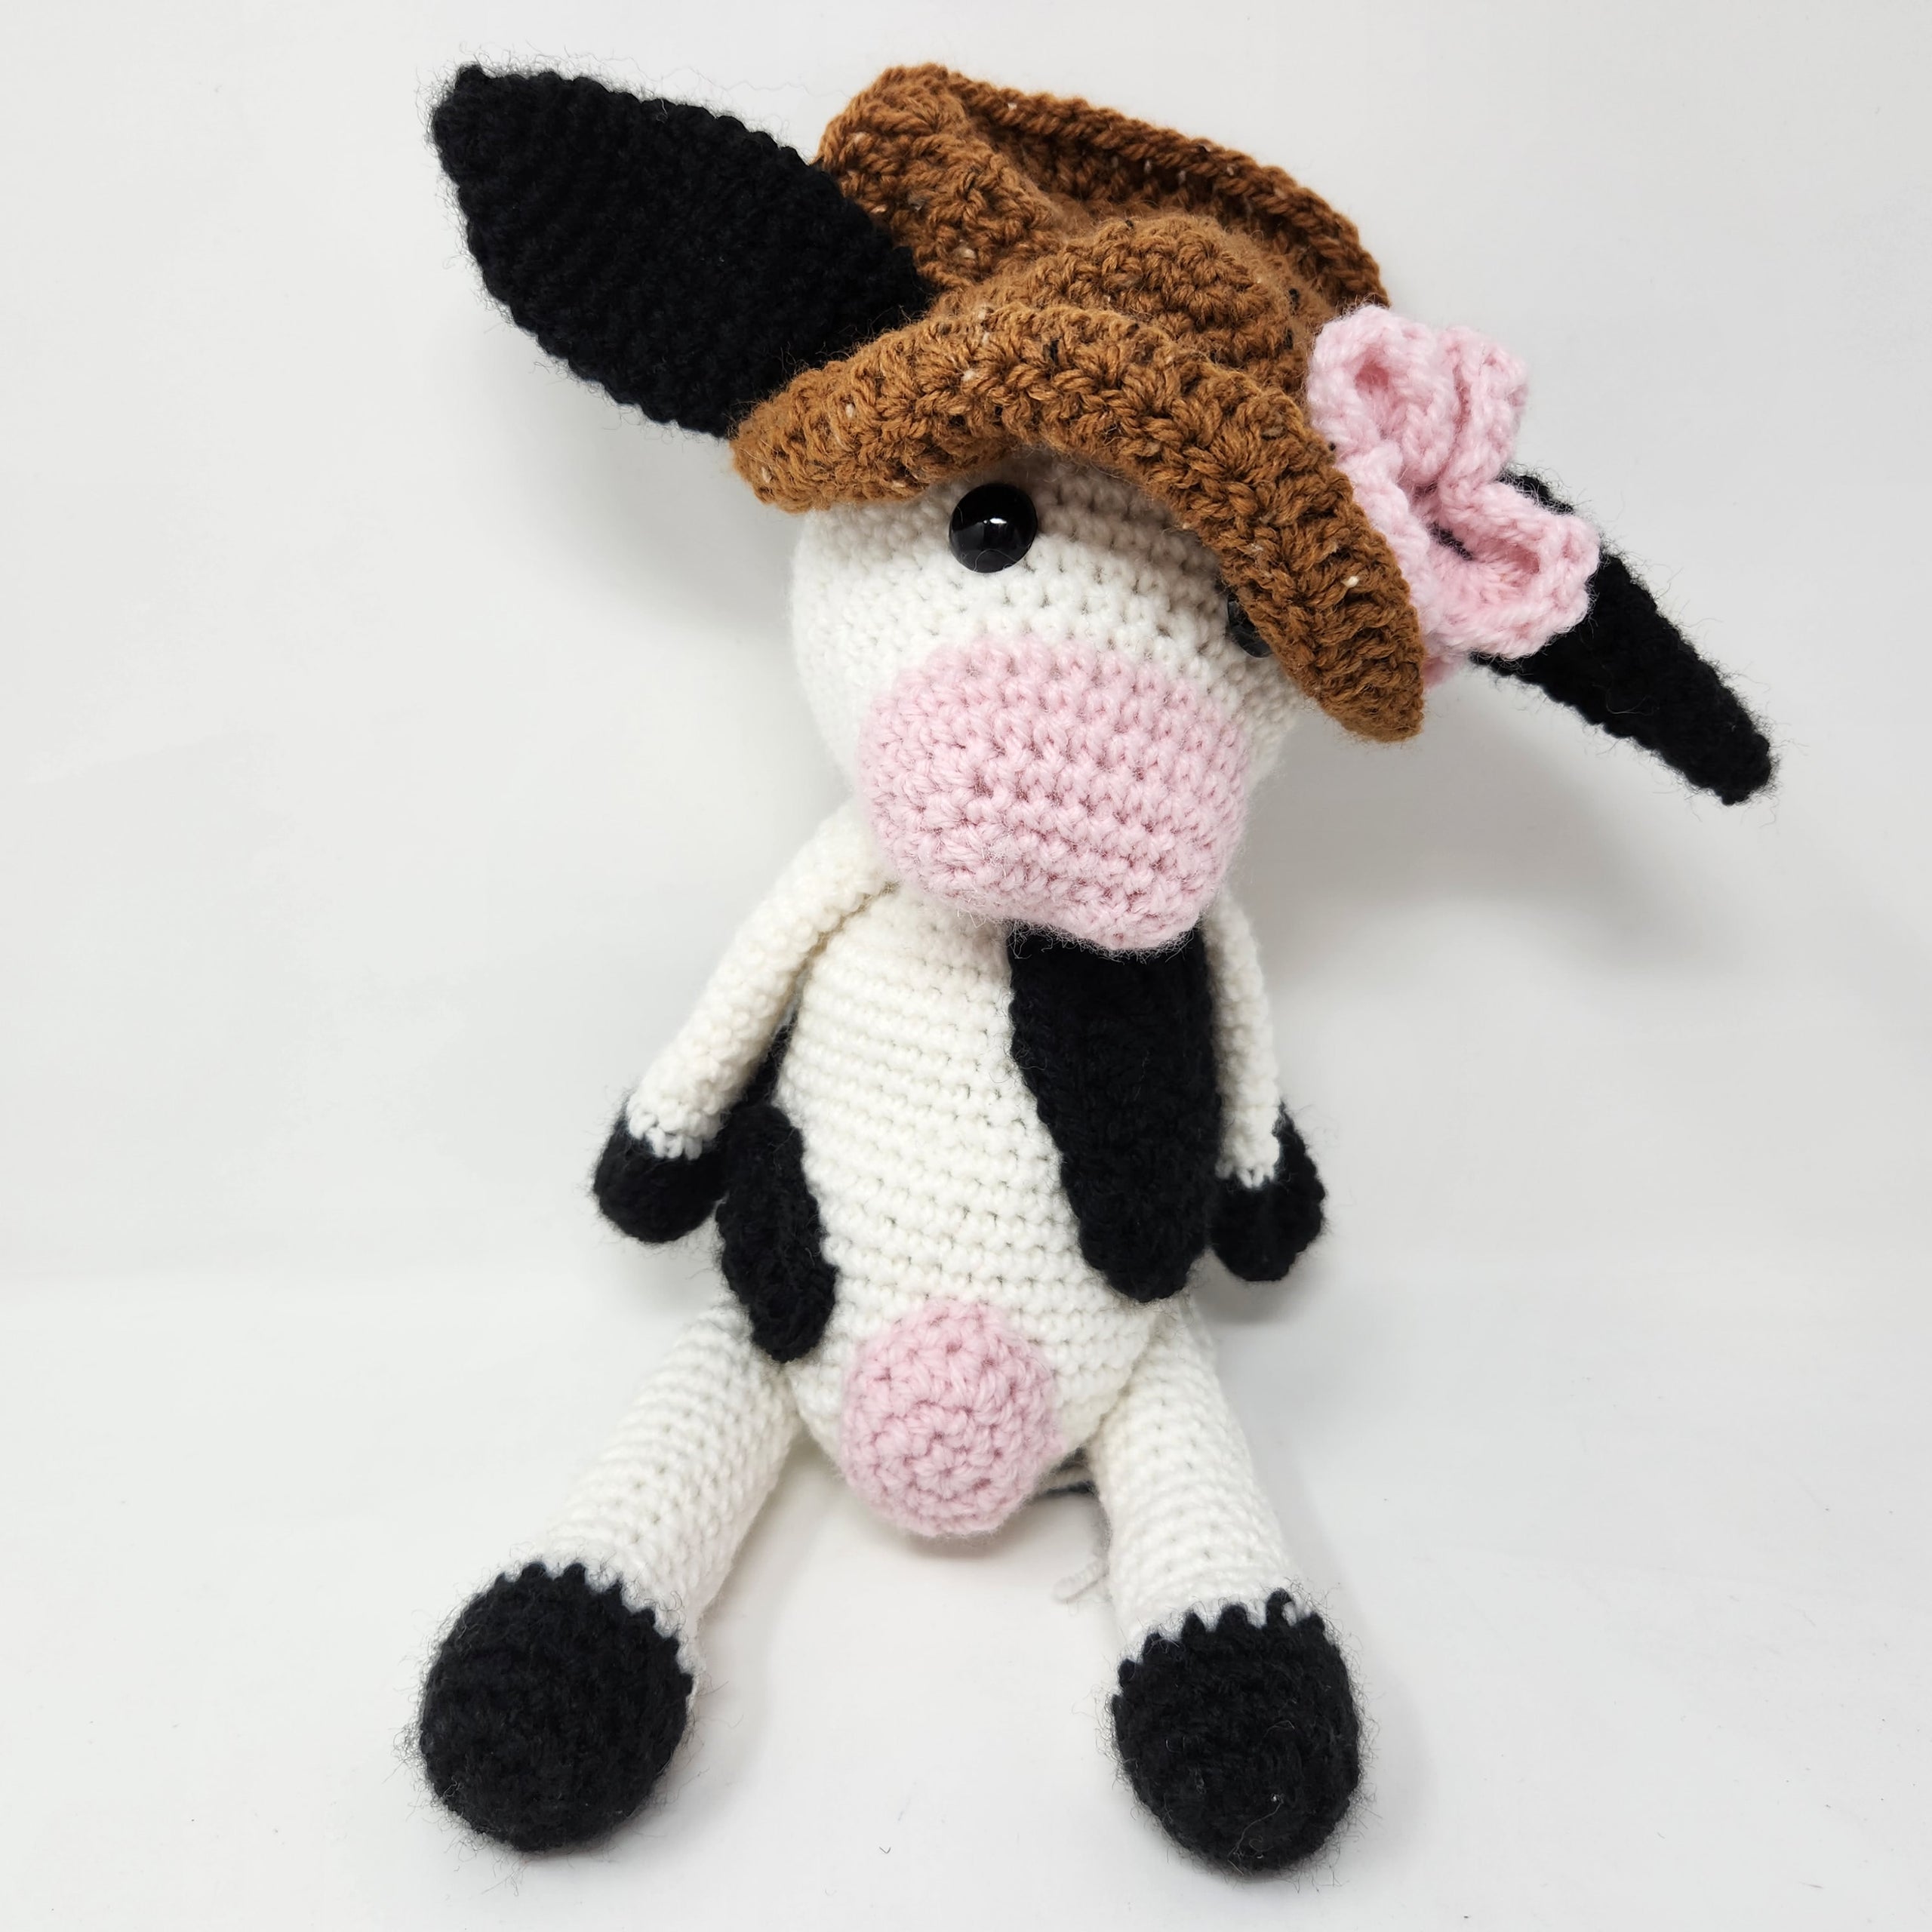 Chelse the Cow - Crochet Amigurumi Kit